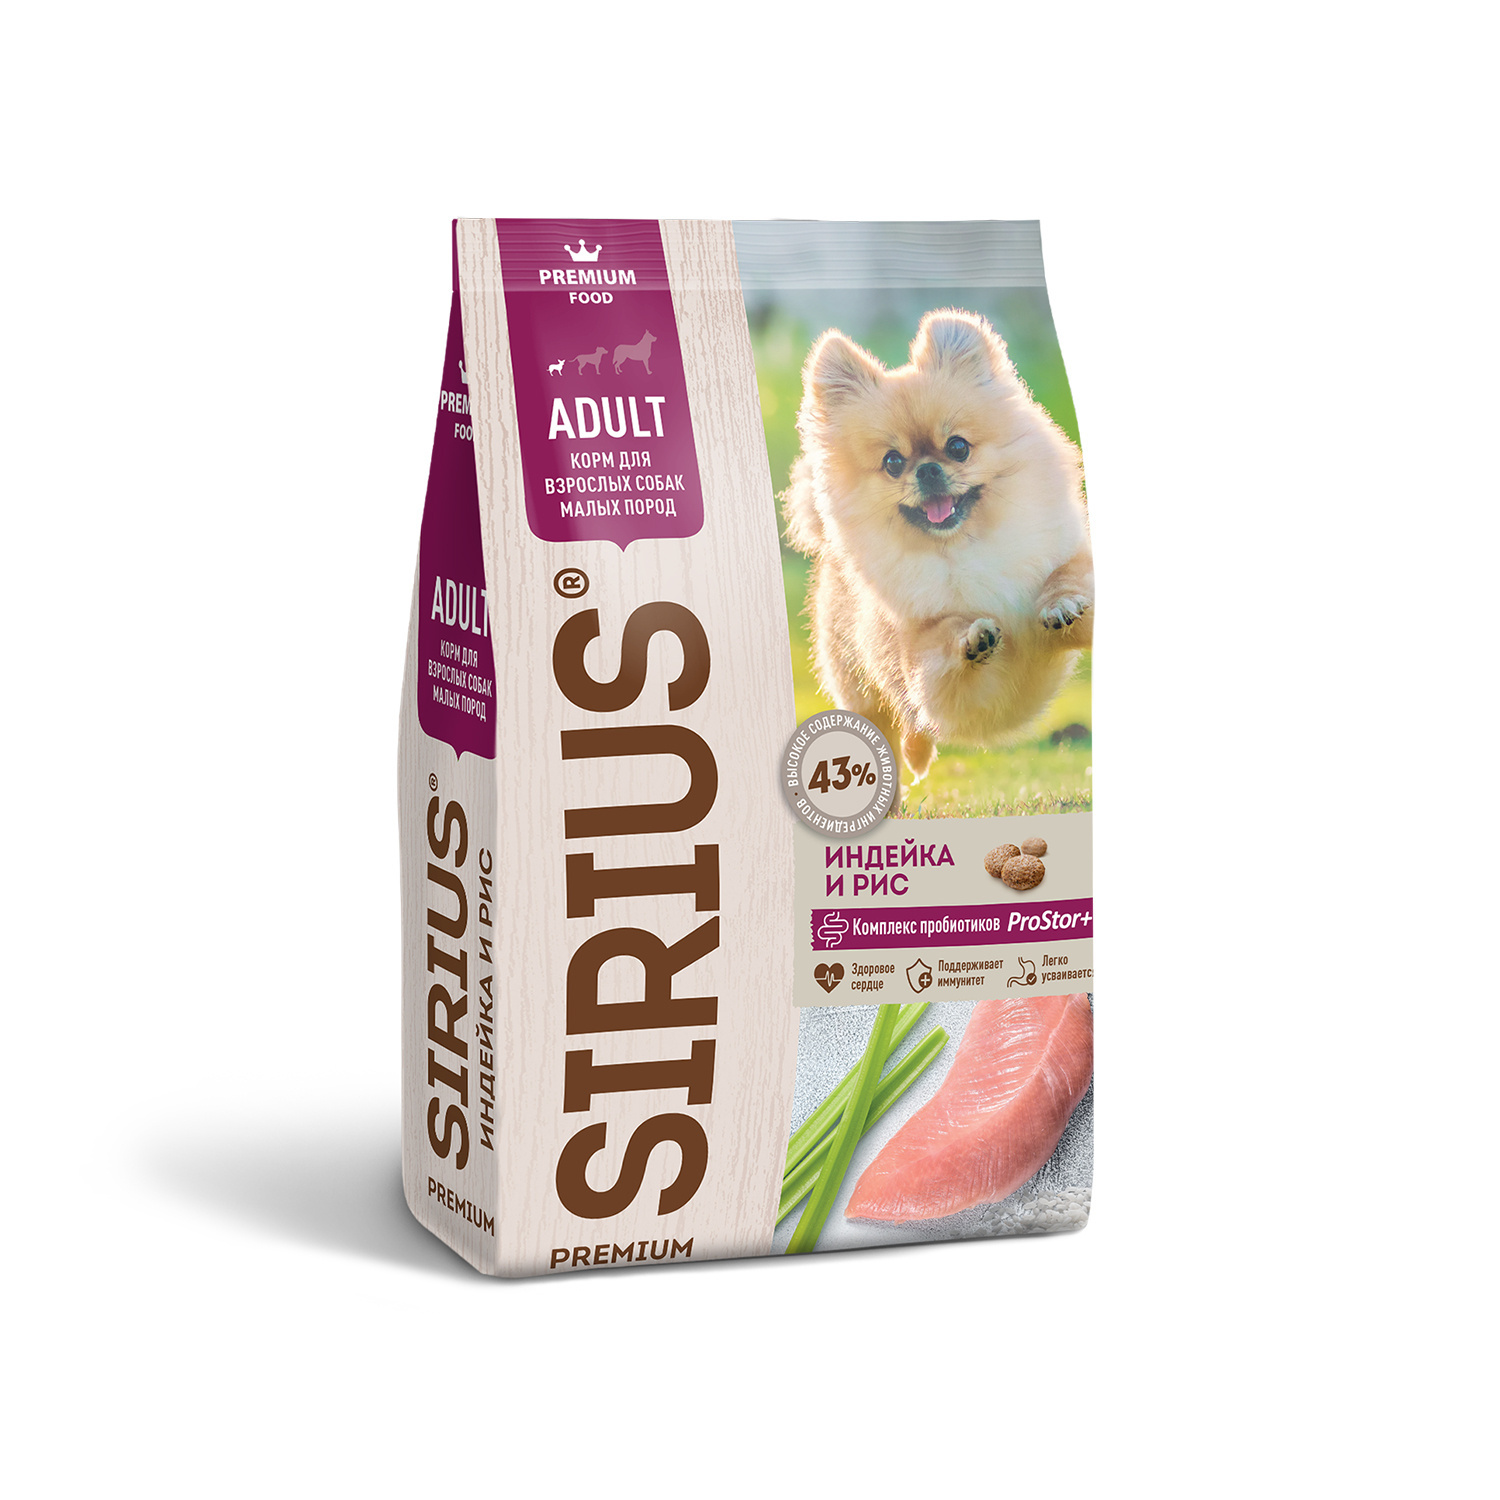 Sirius Sirius сухой корм для собак малых пород, индейка и рис (10 кг) sirius sirius сухой корм для собак средних пород индейка и утка 12 кг